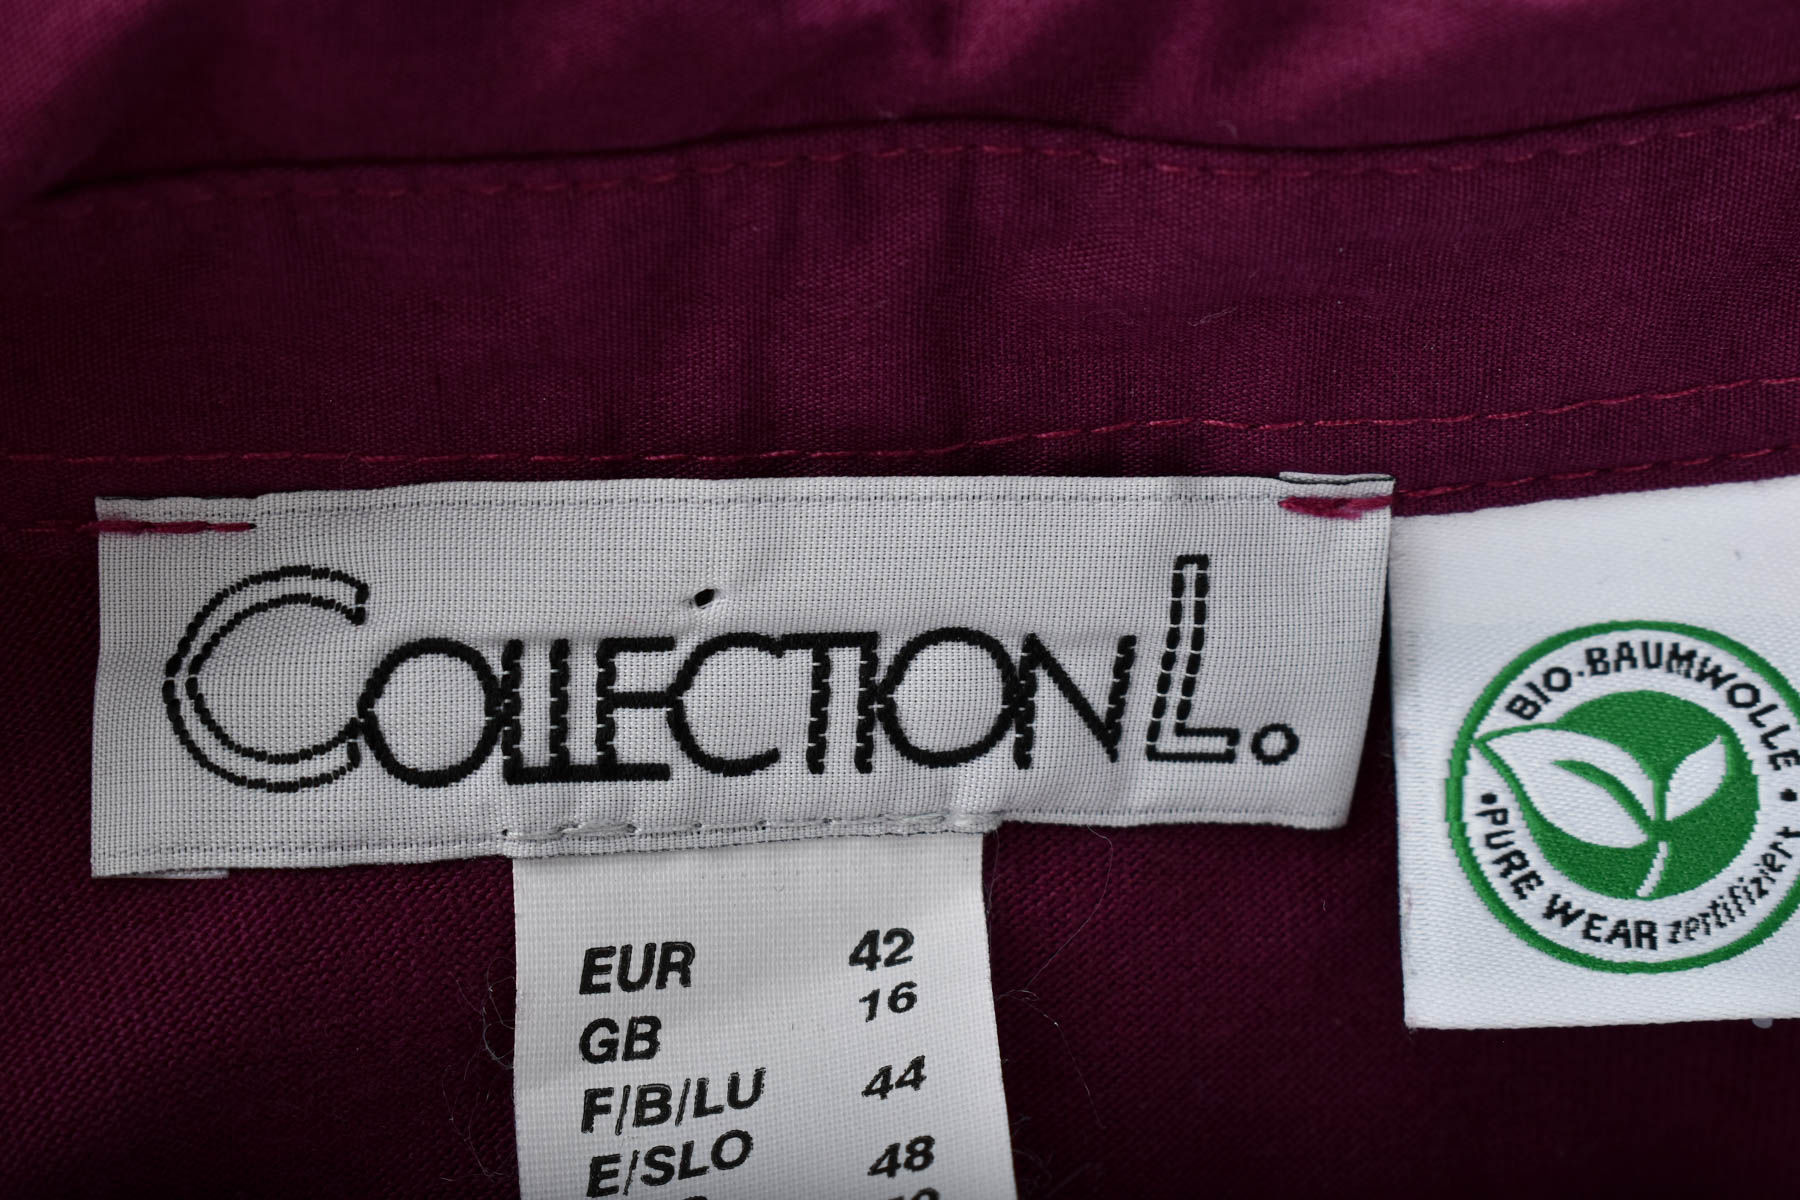 Bluza de damă - Collection L - 2